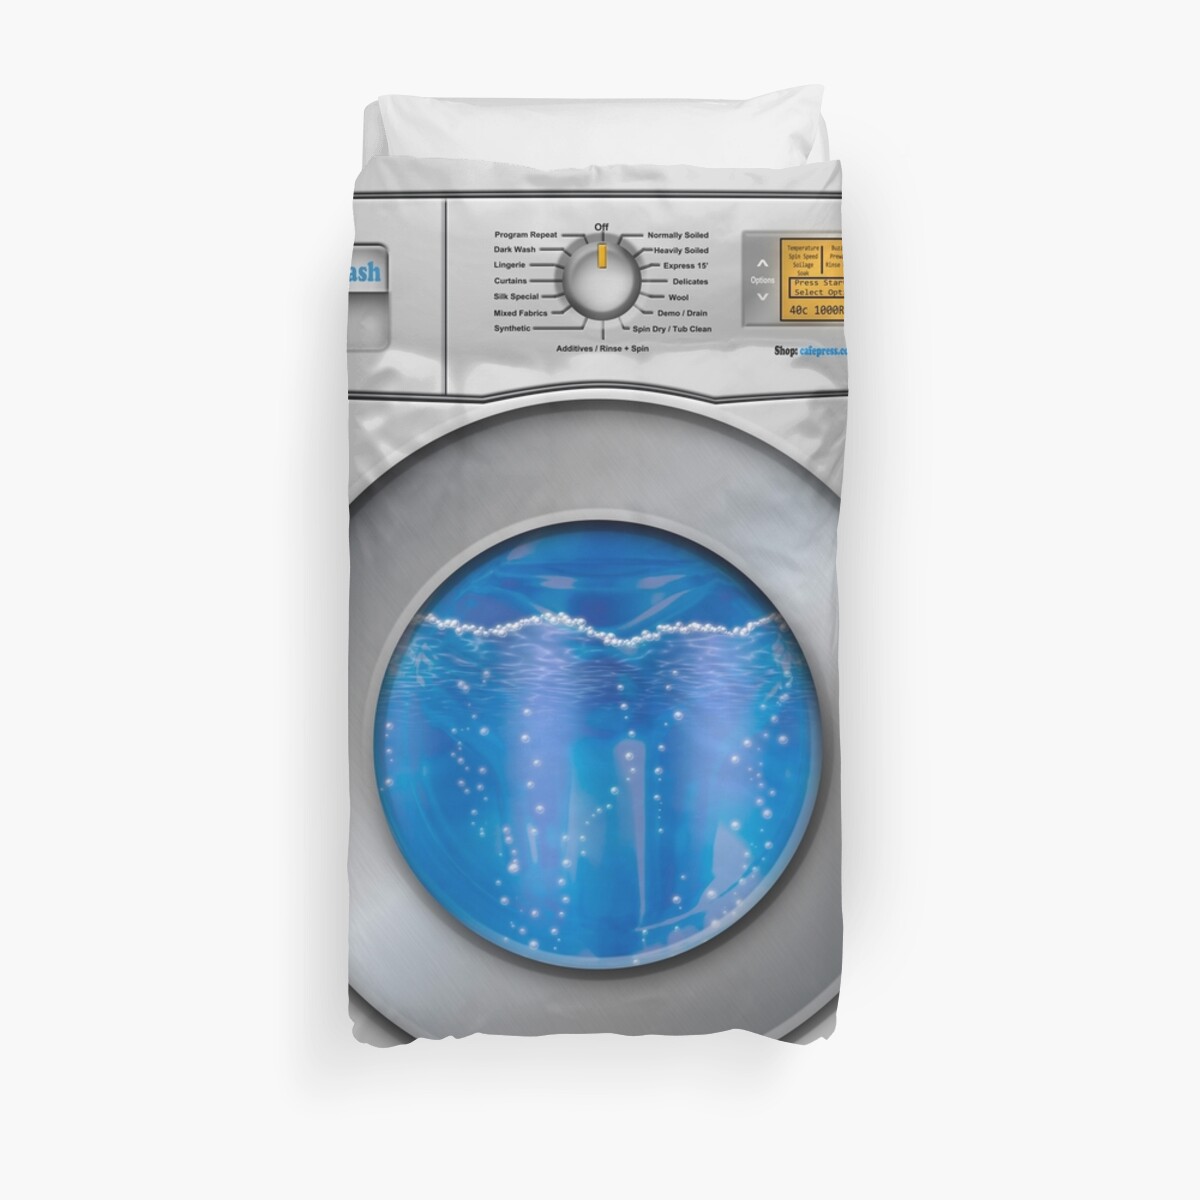 Washing Machine Duvet Cover By Bonniephantasm Redbubble